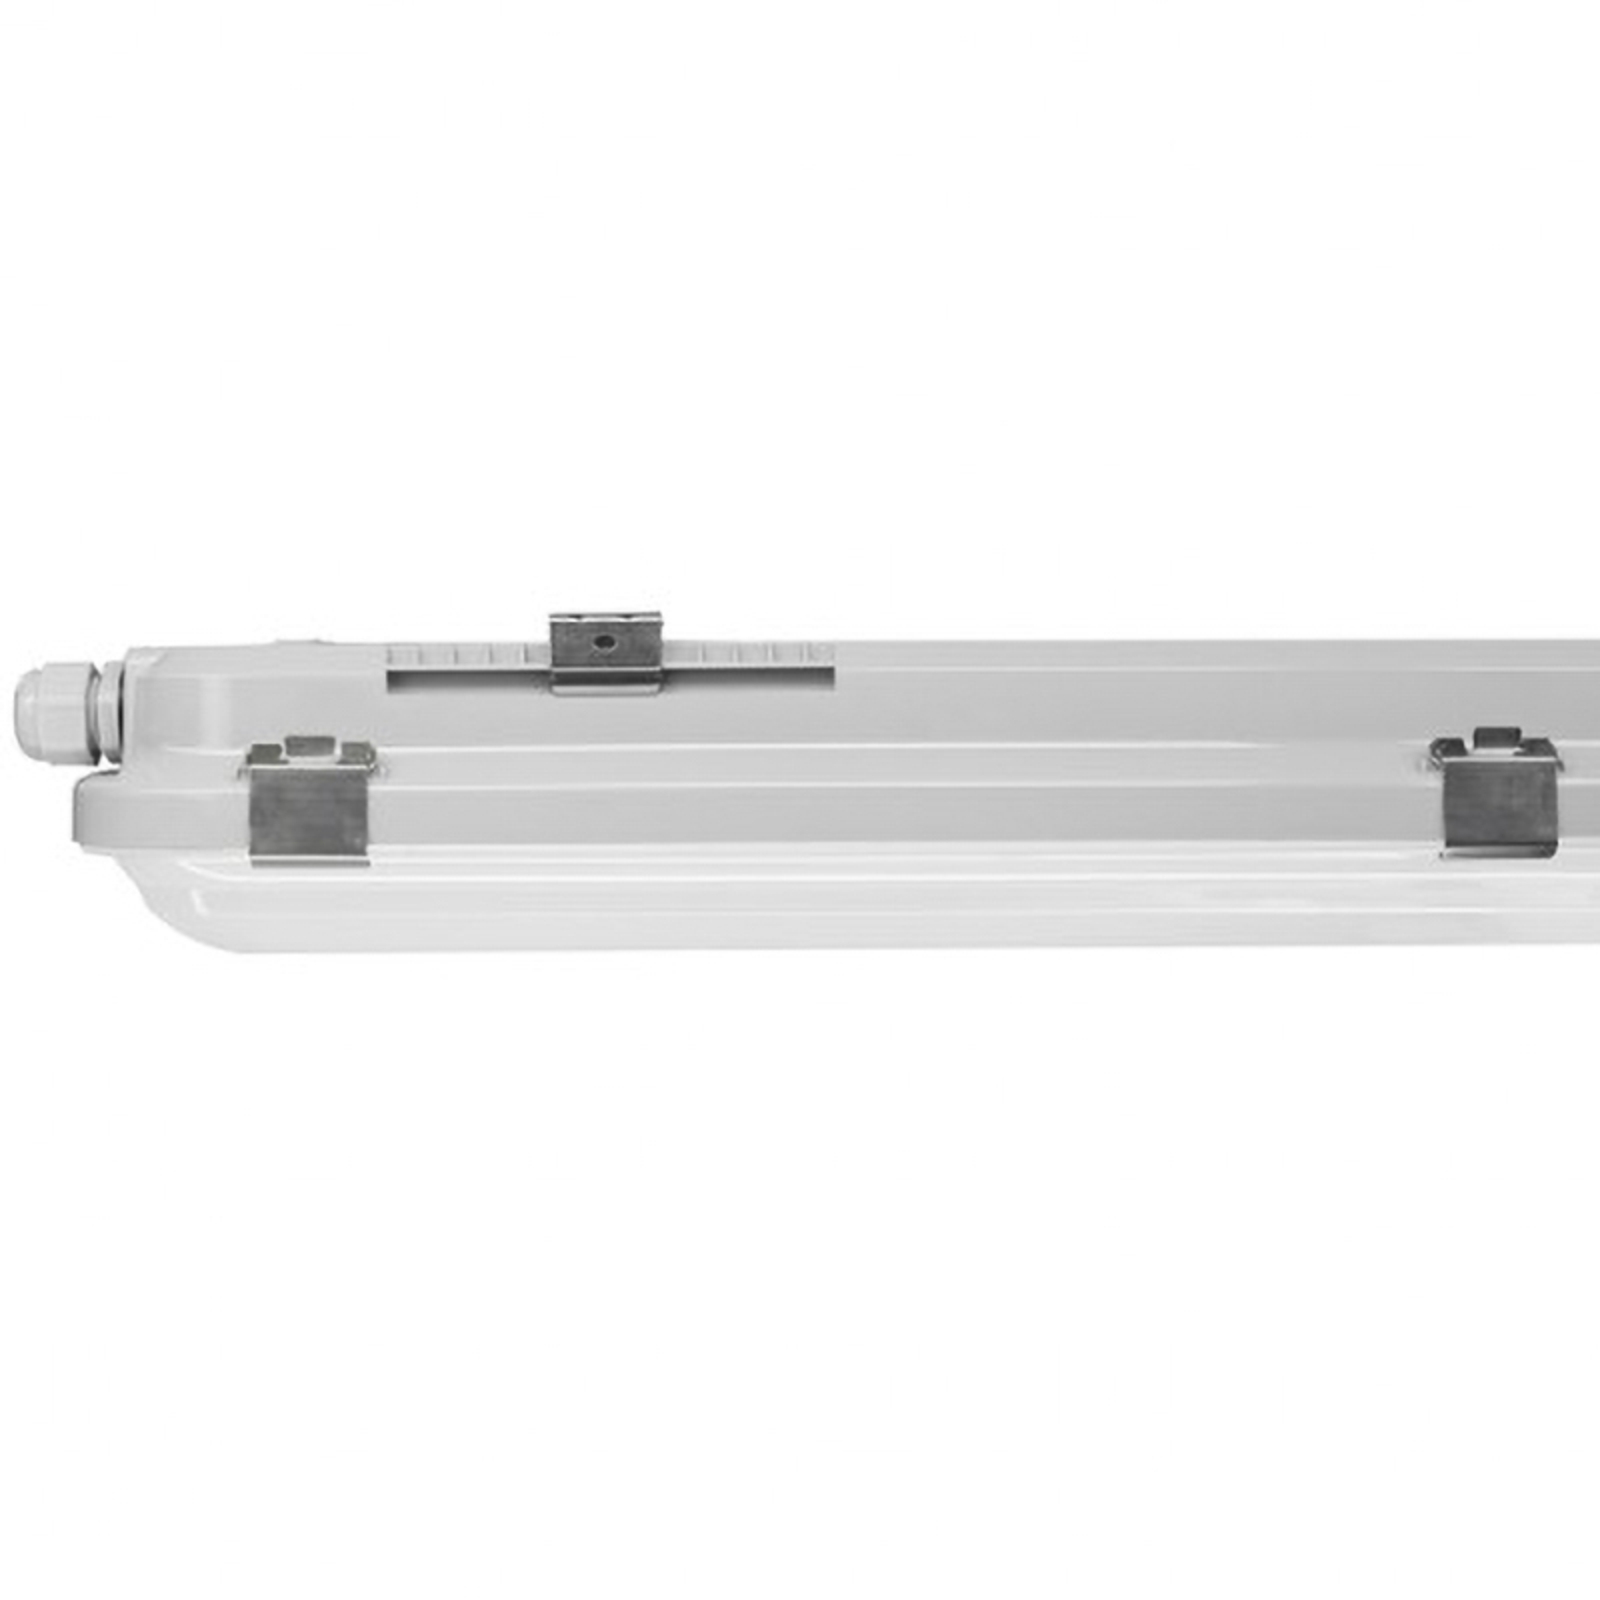 InnoGreen AQUOS 3.0 BASELine LED-lampa 152cm 850